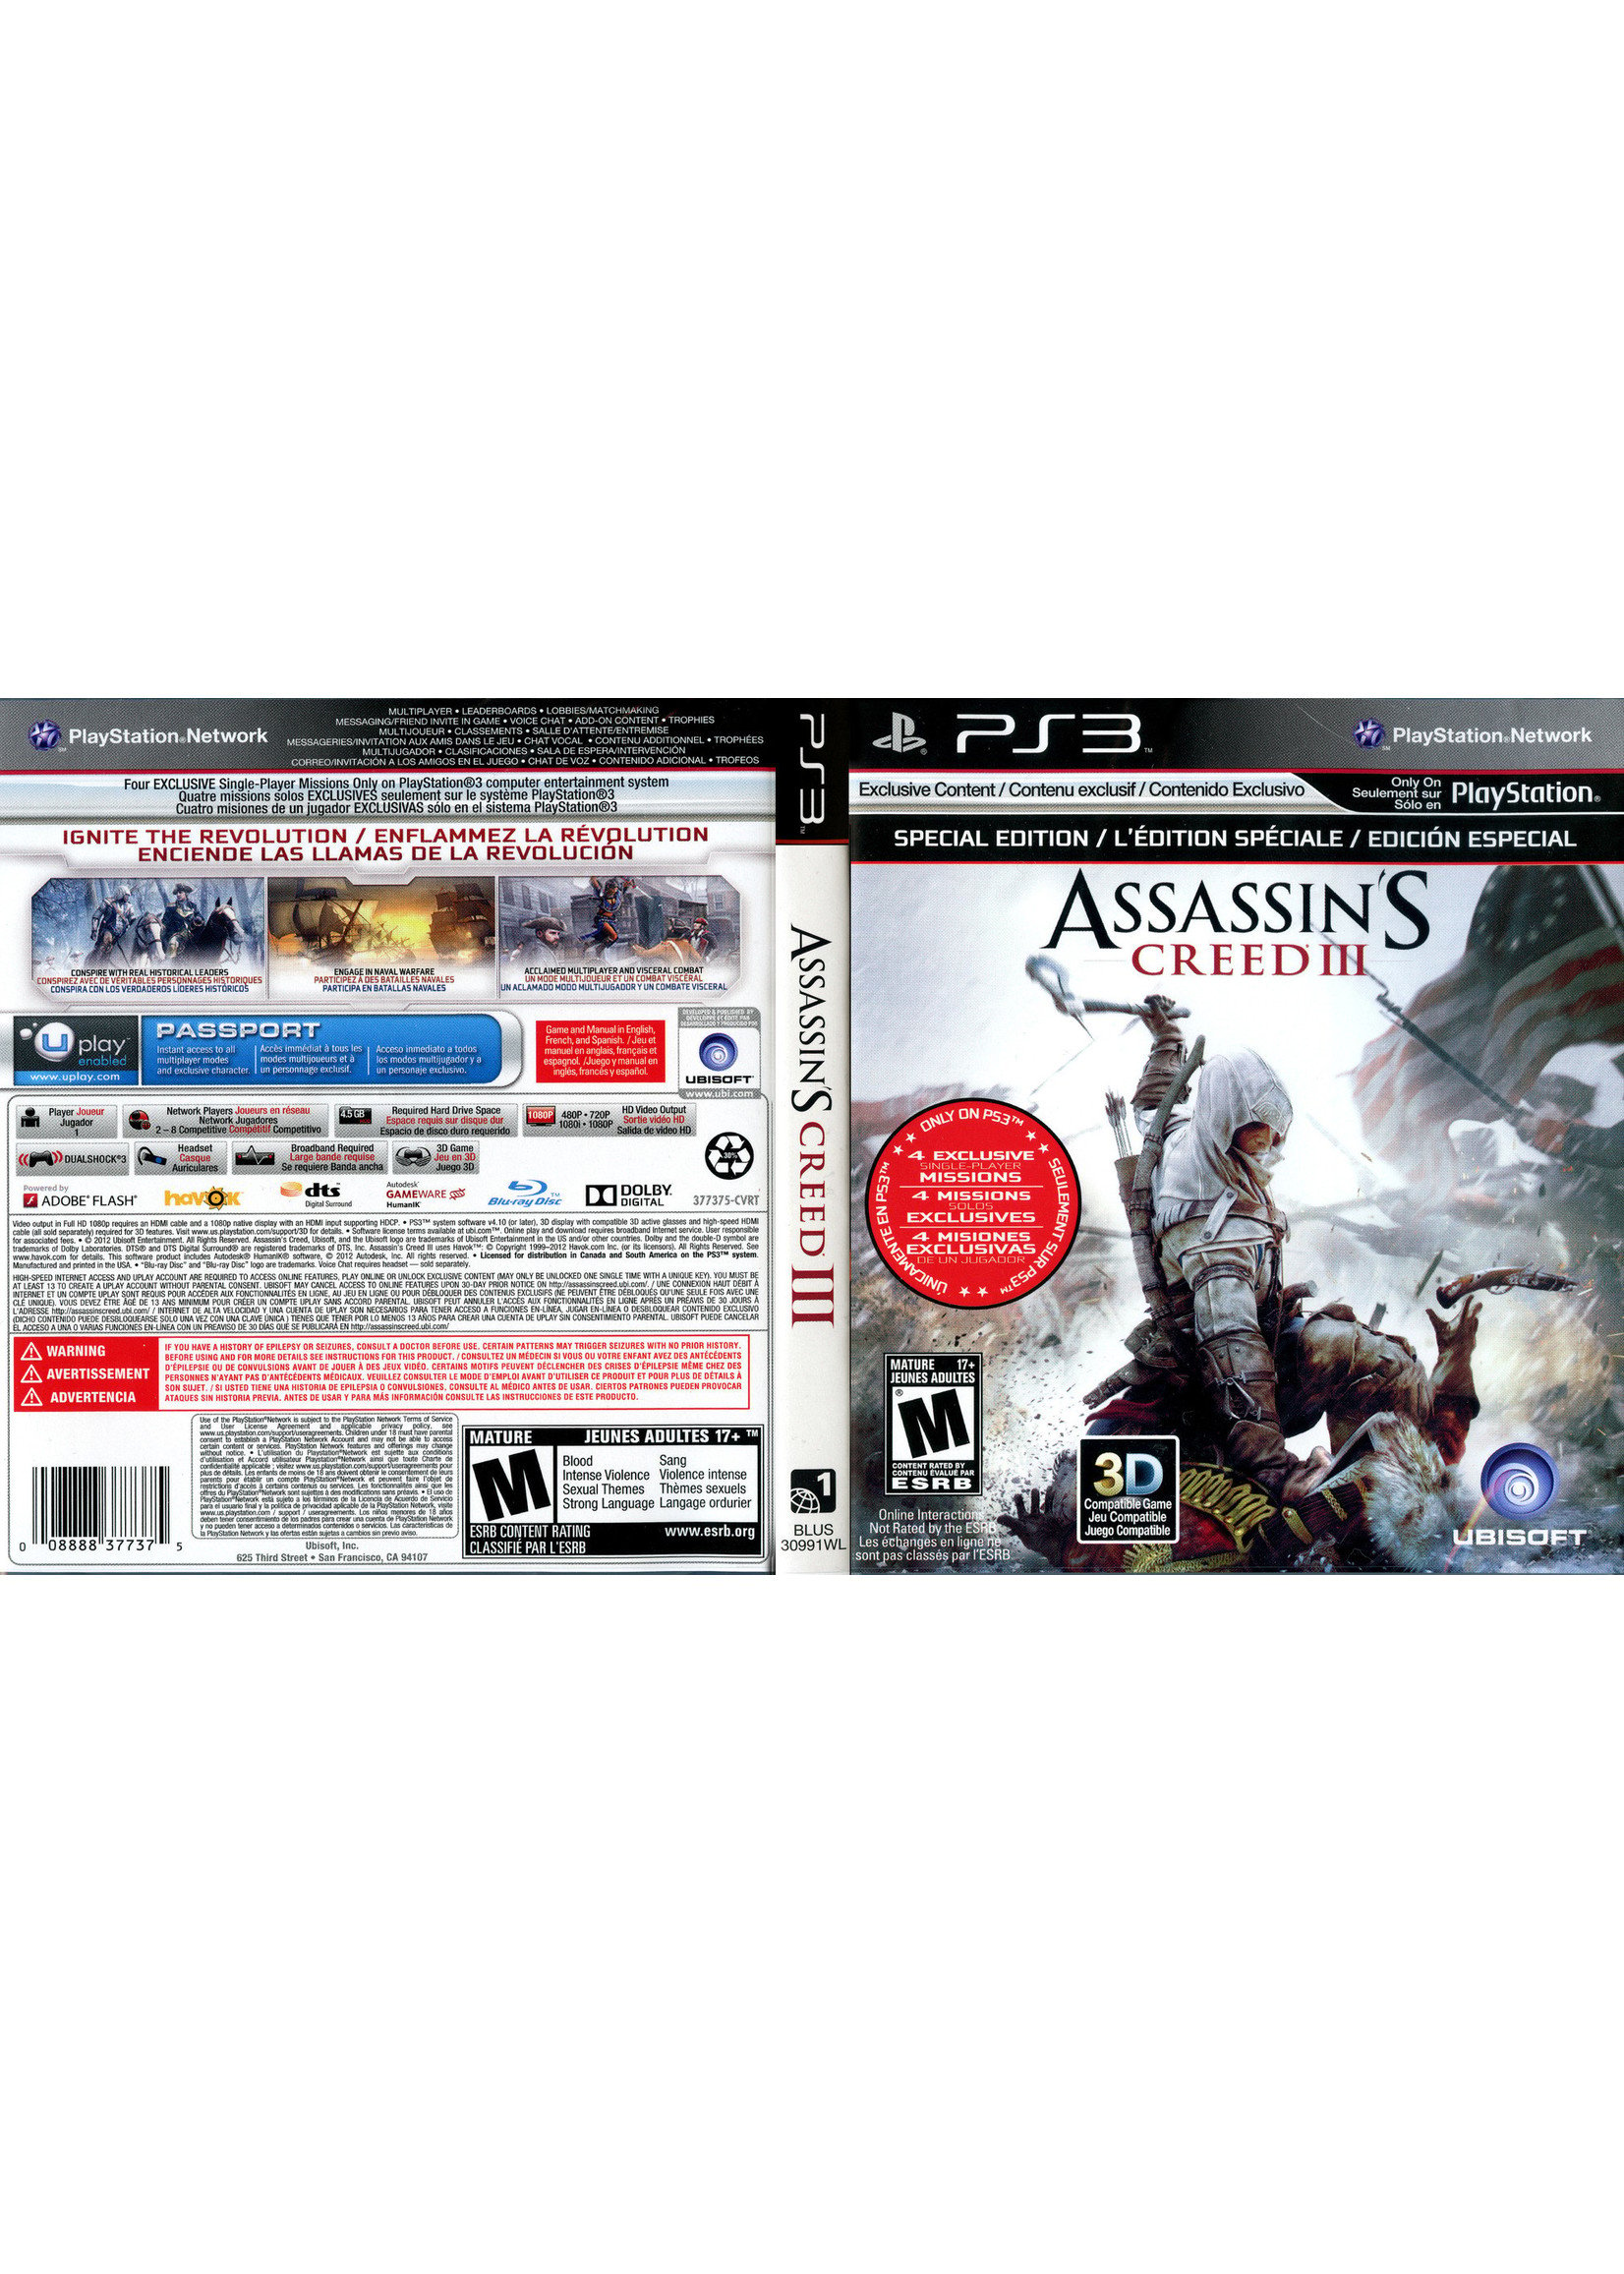 Sony Playstation 3 (PS3) Assassin's Creed III